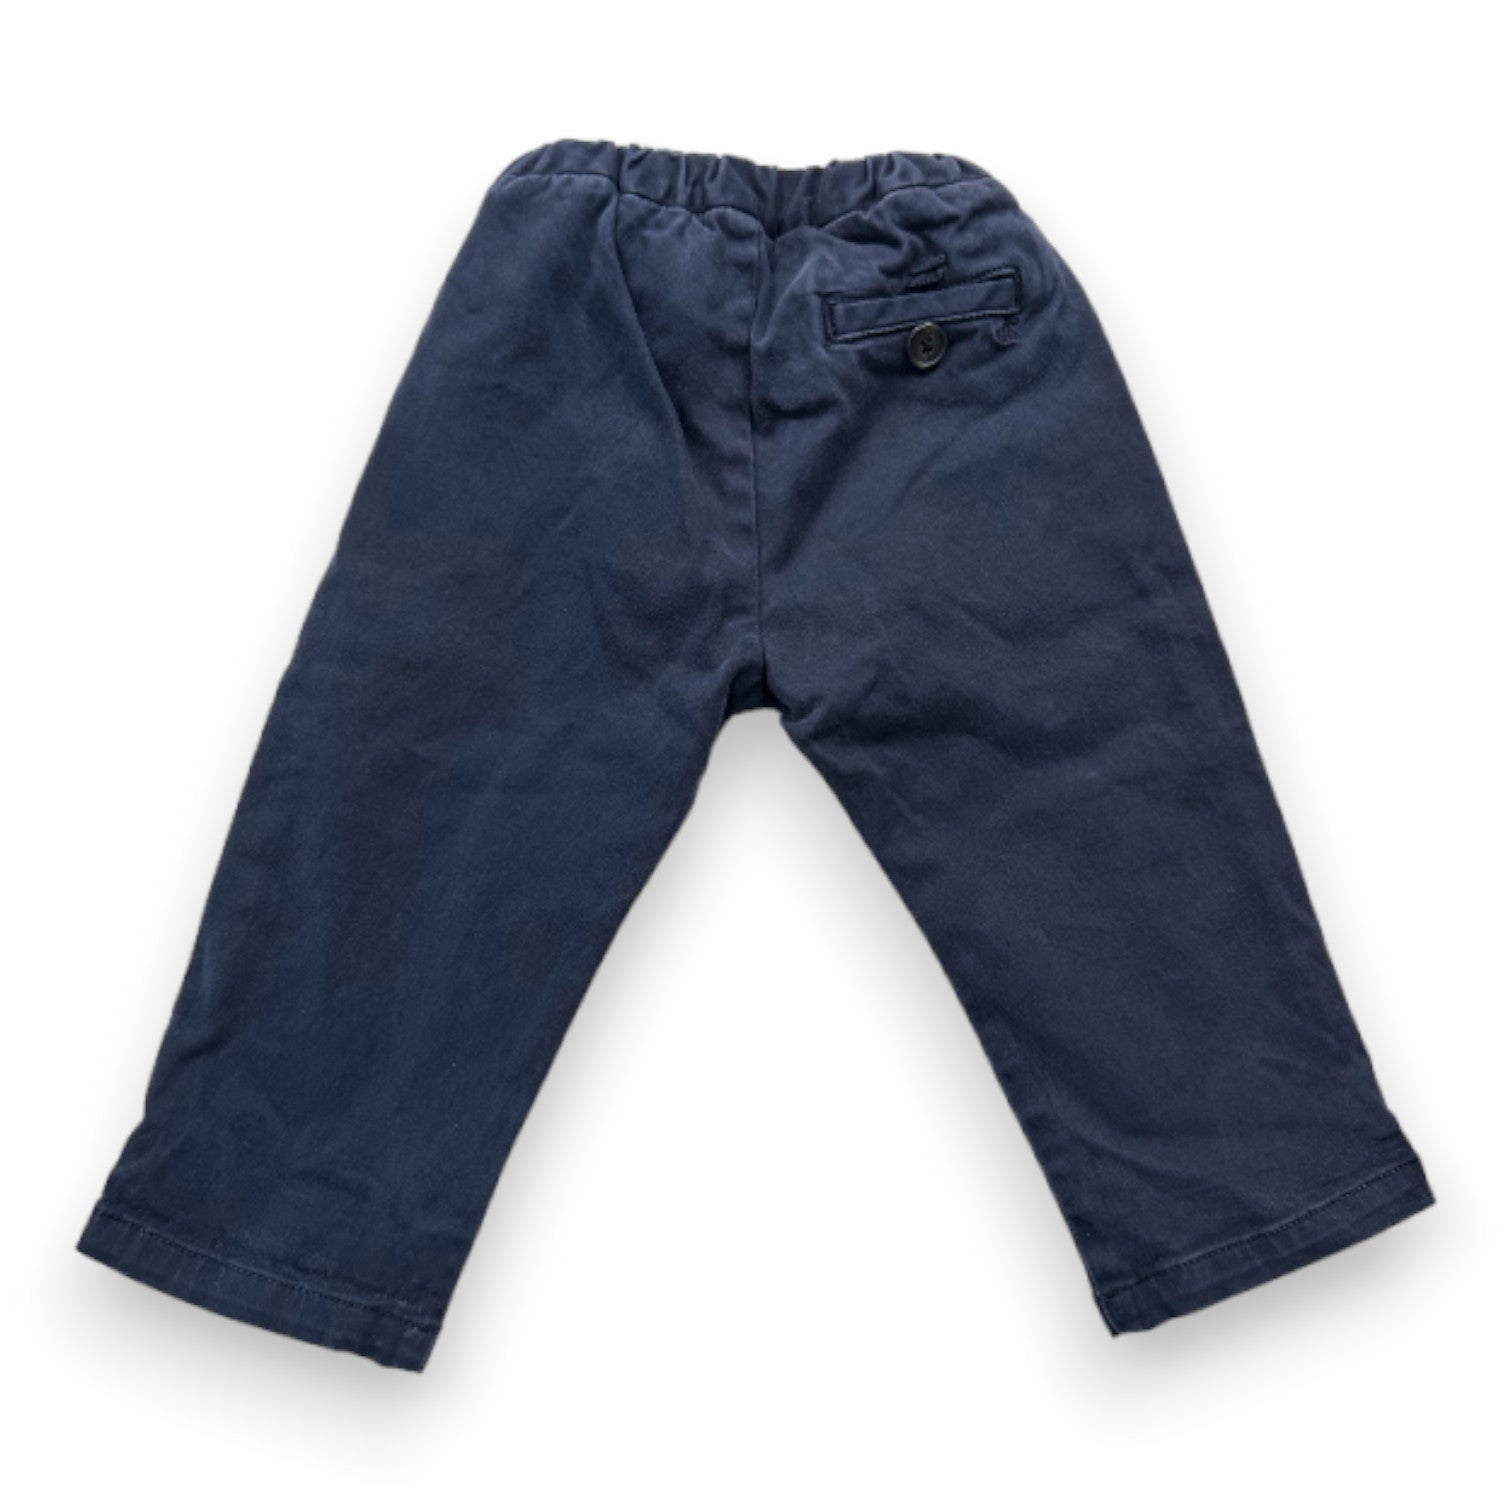 BONPOINT - Pantalon bleu - 18 mois